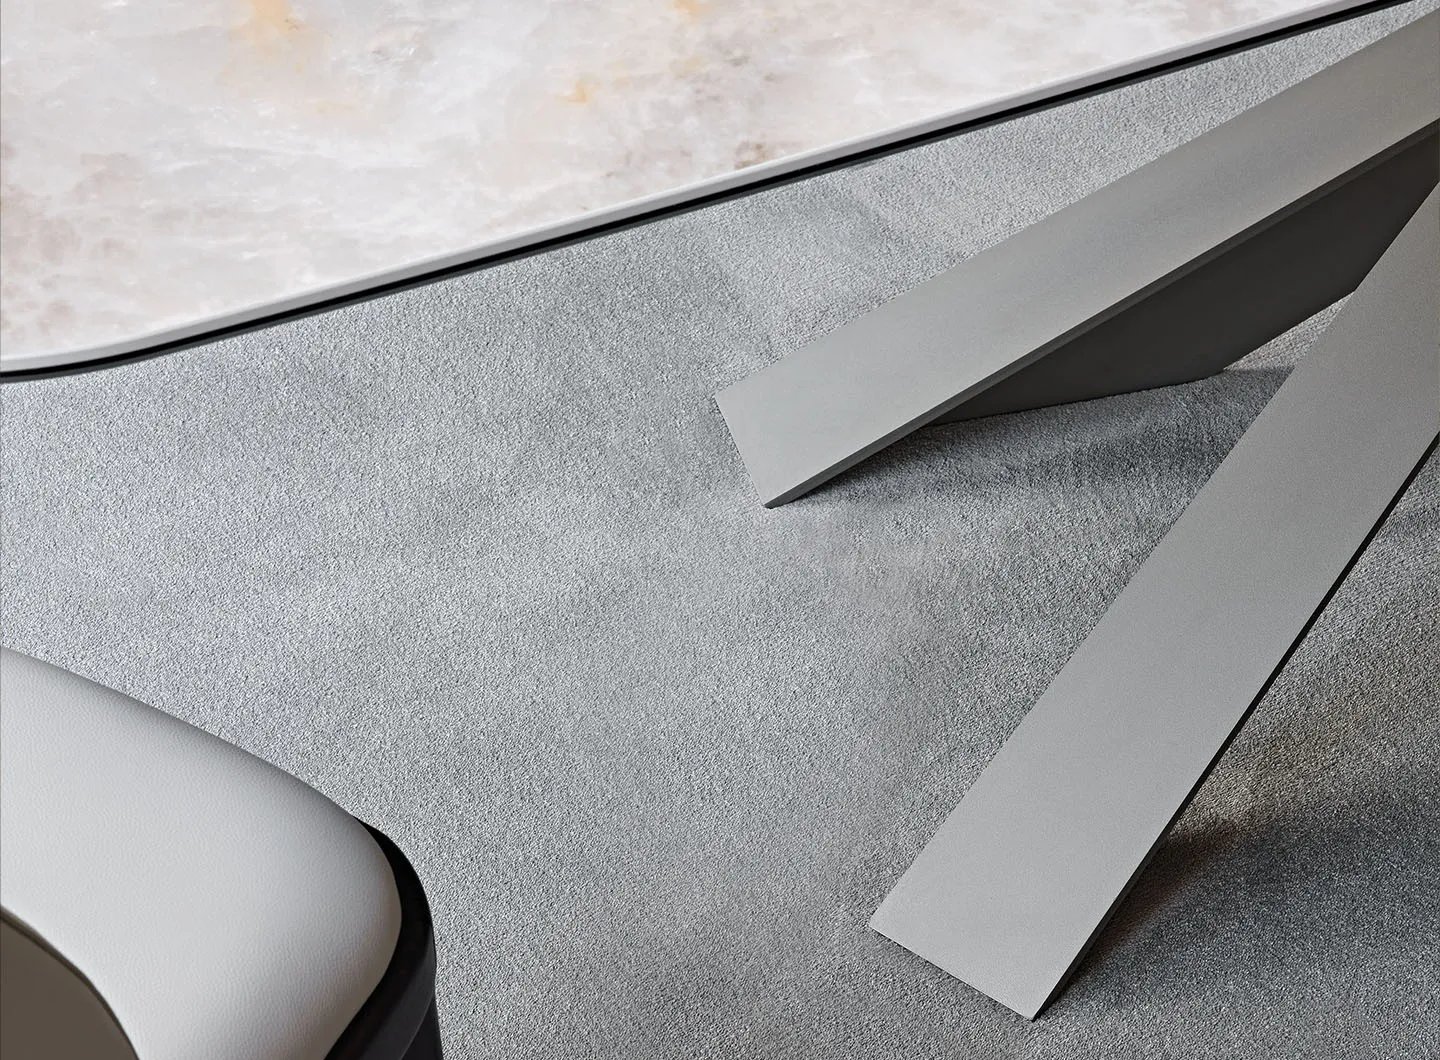 Lancer Keramik table - titanium base, Corcovado ceramic top